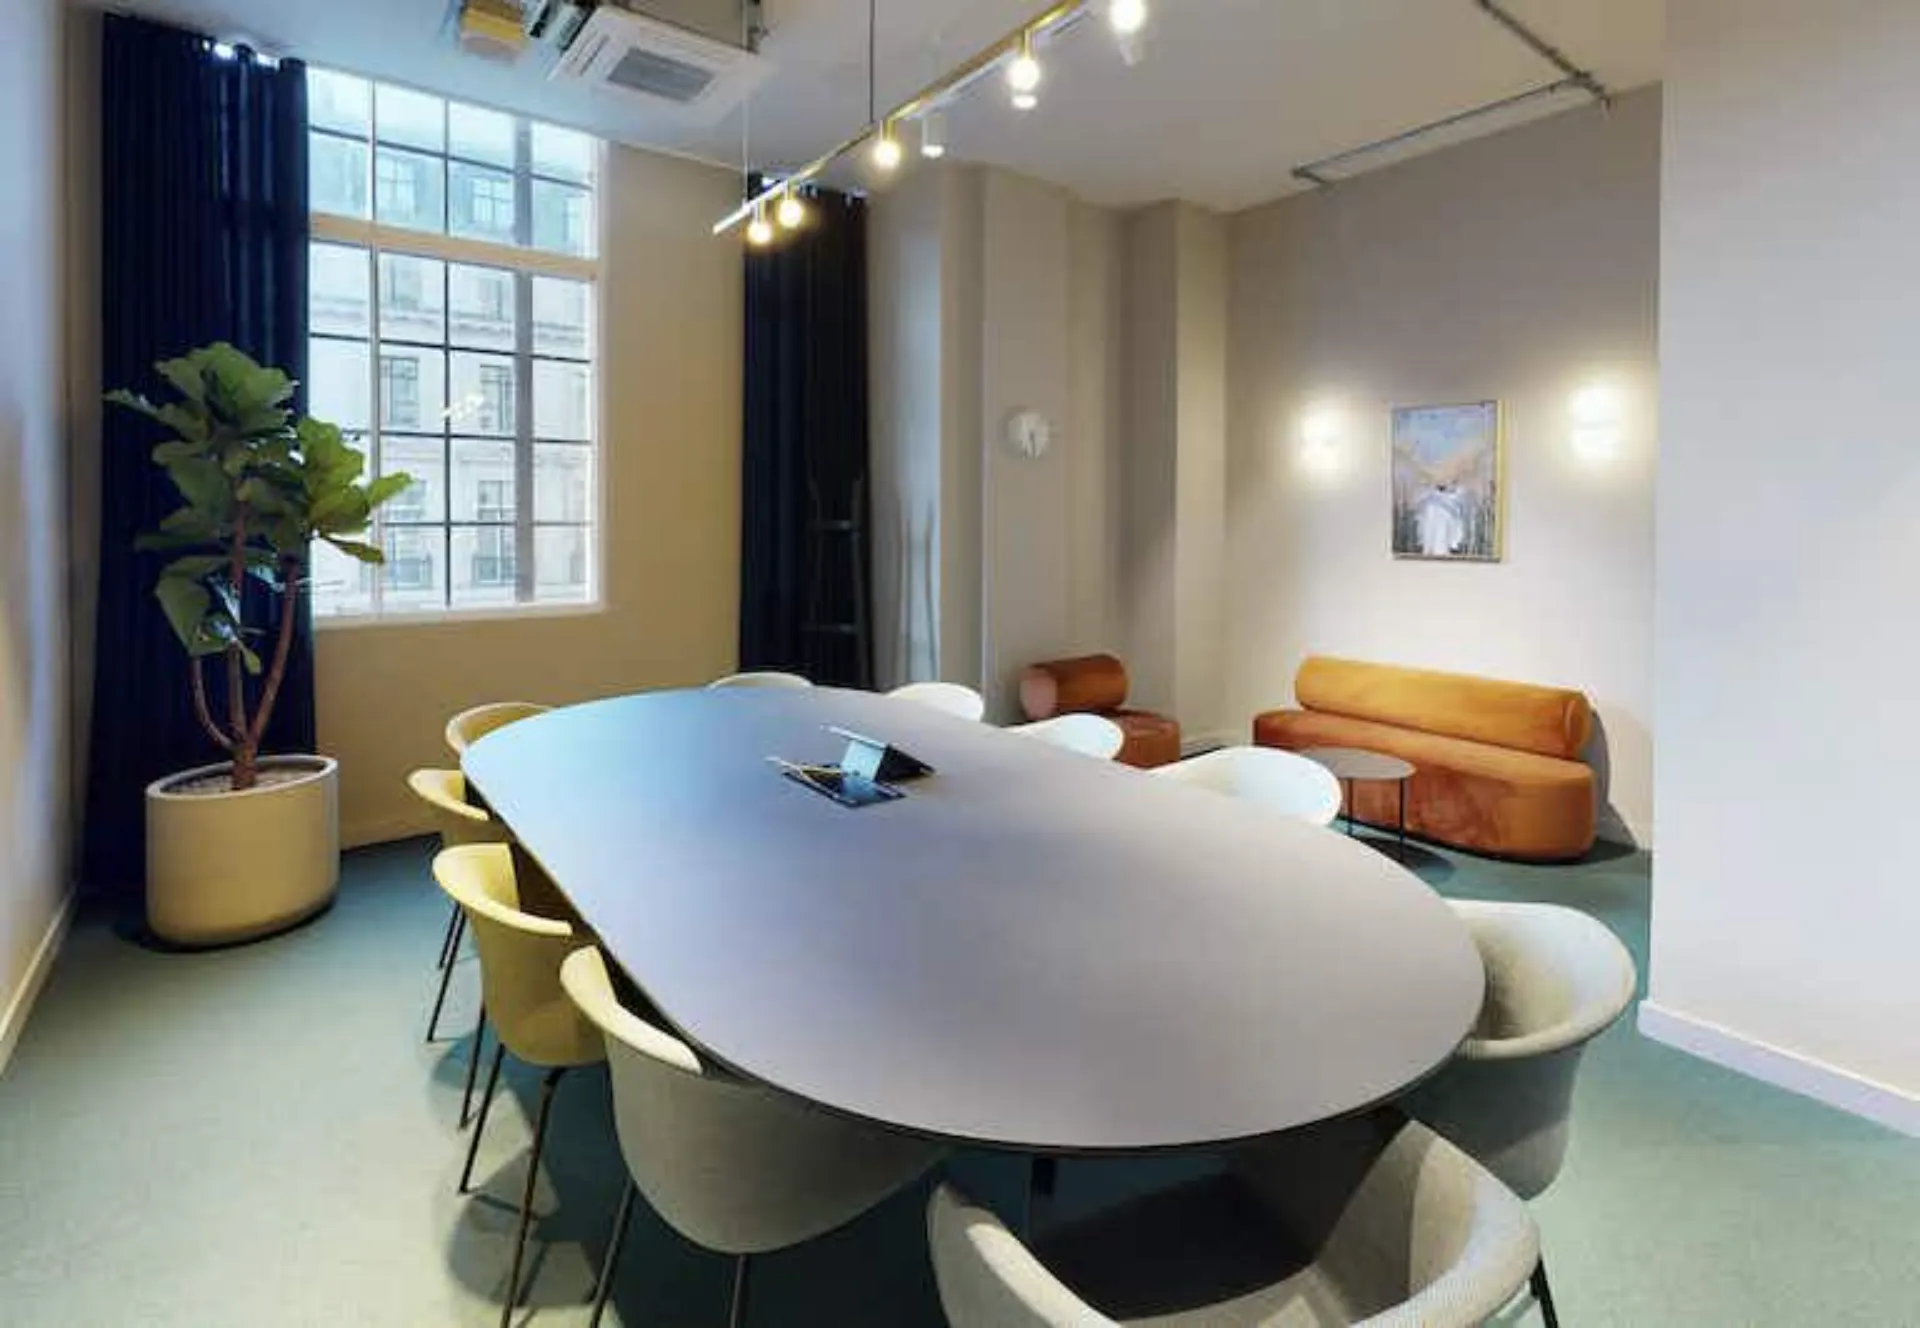 FORA meeting room venue hire spacious light boardroom conference room presentations